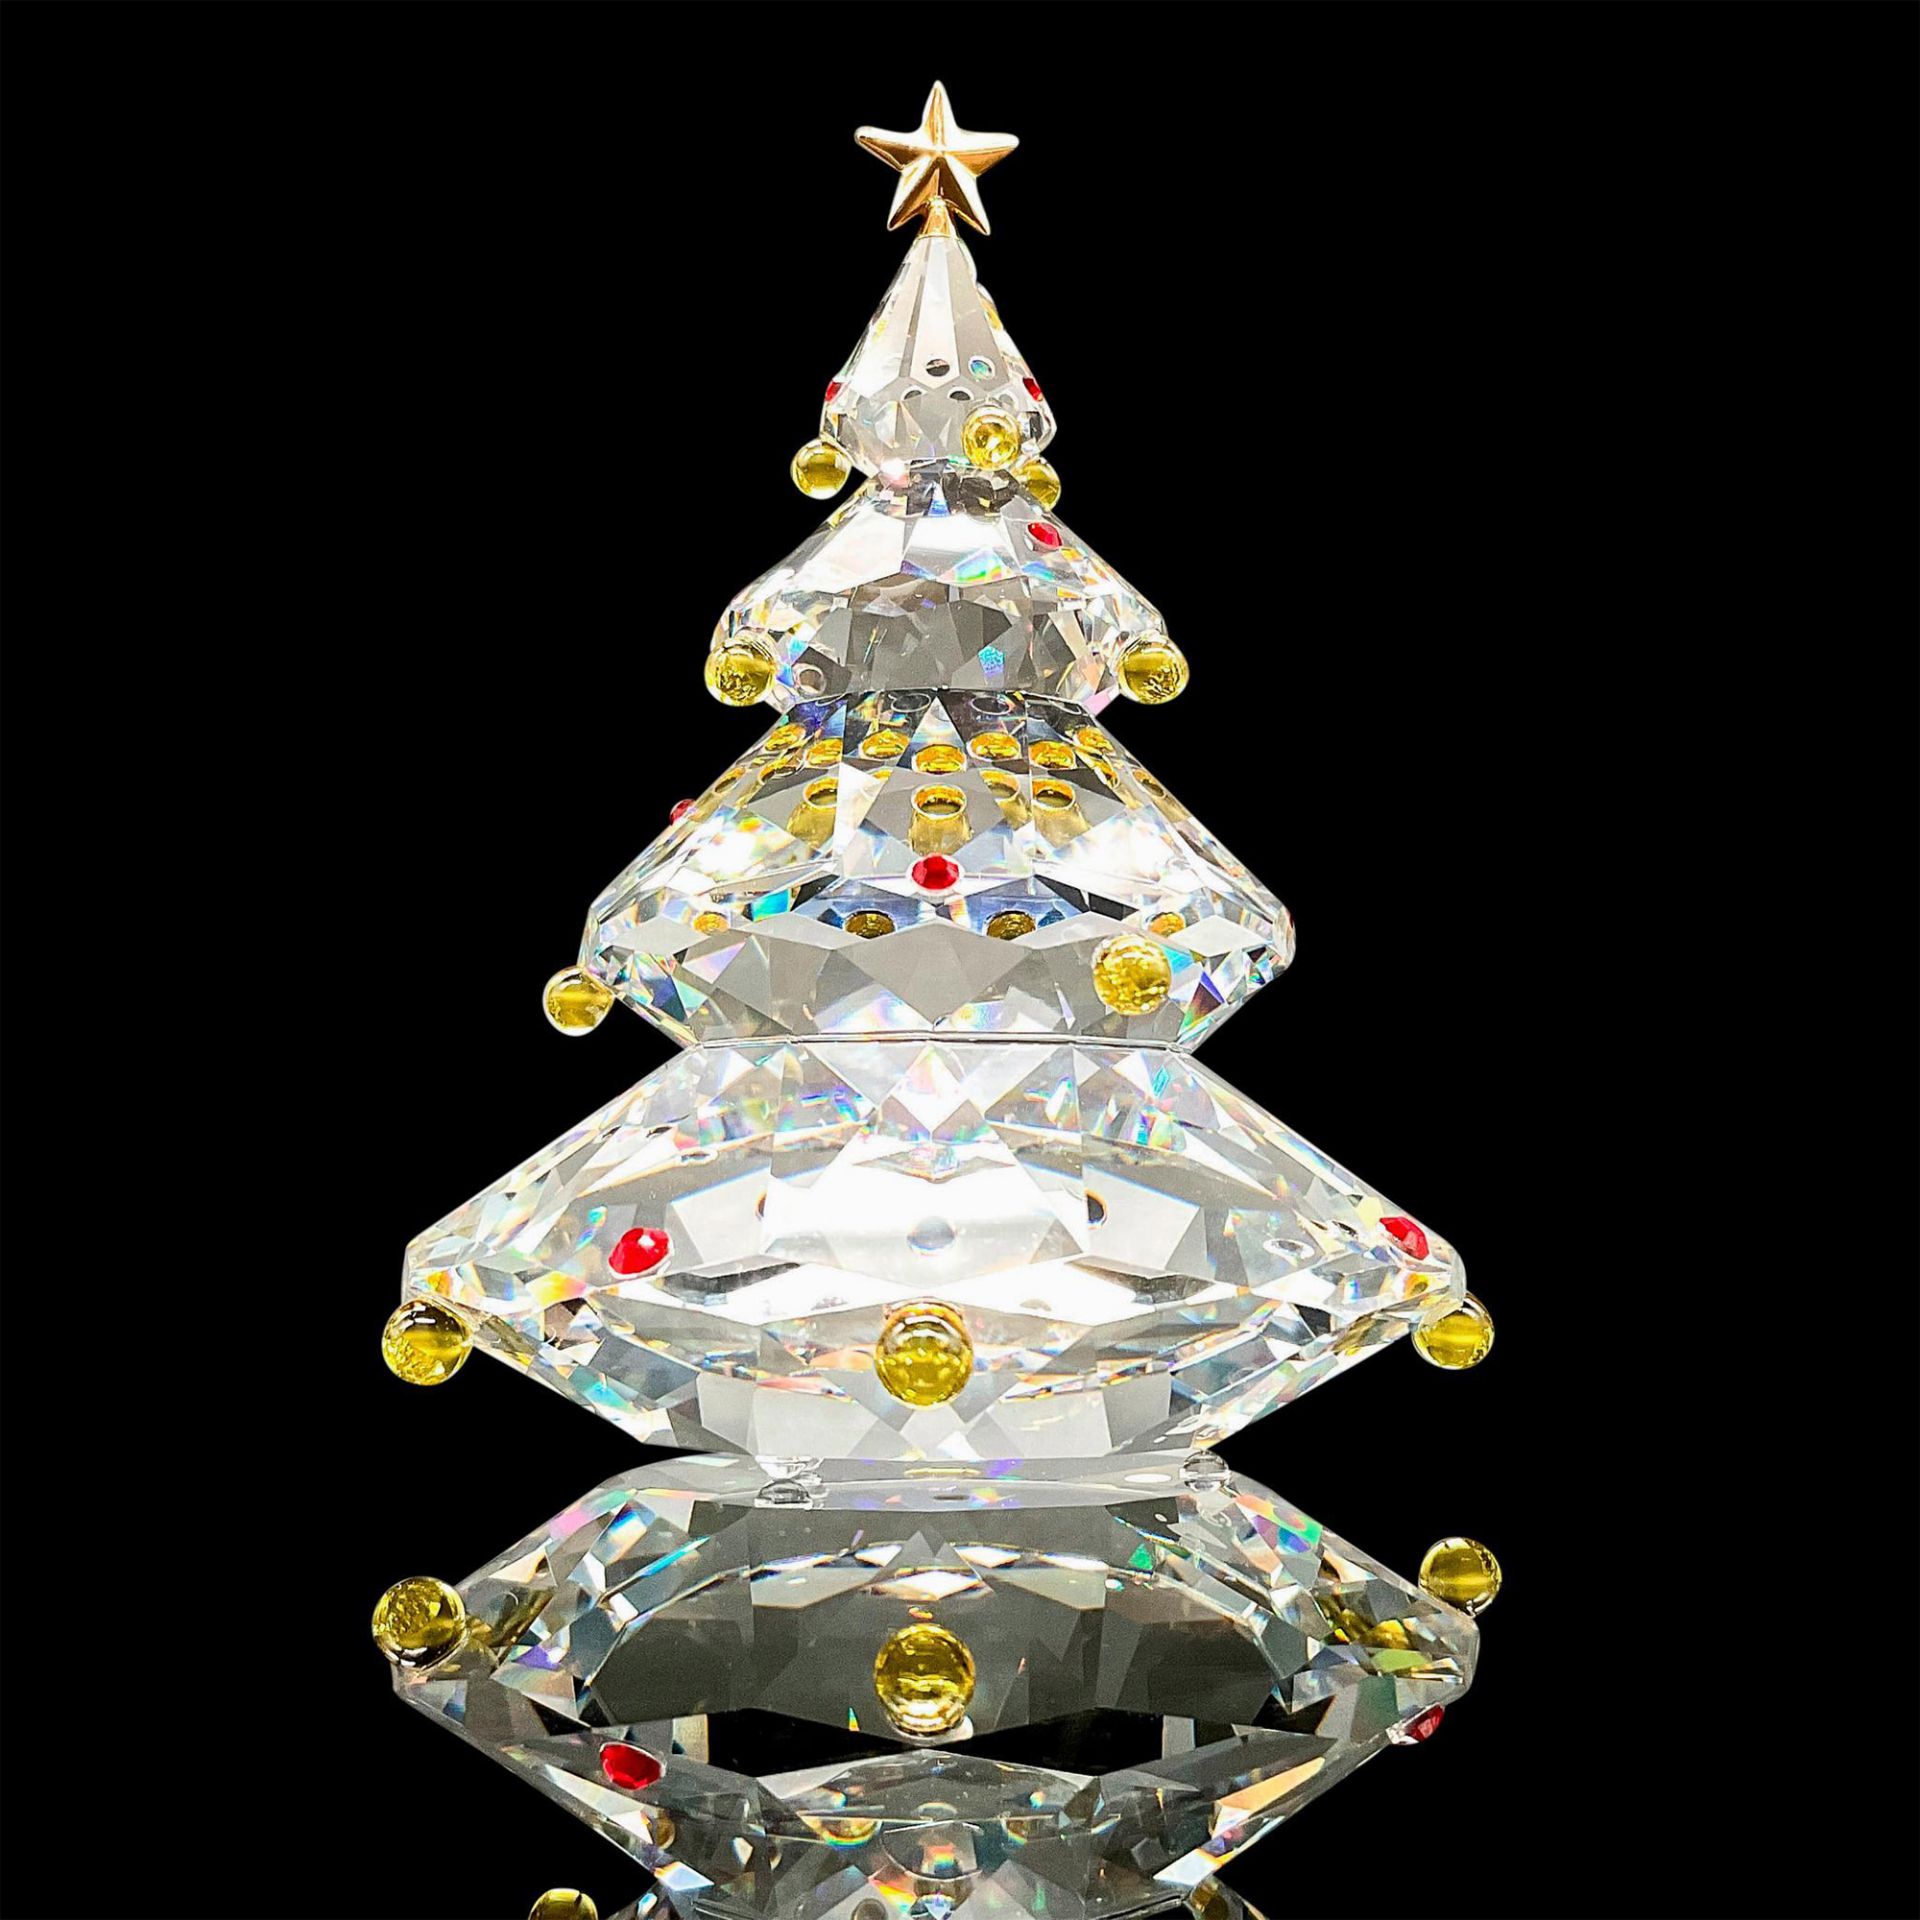 Swarovski Silver Crystal Figurine, Christmas Tree